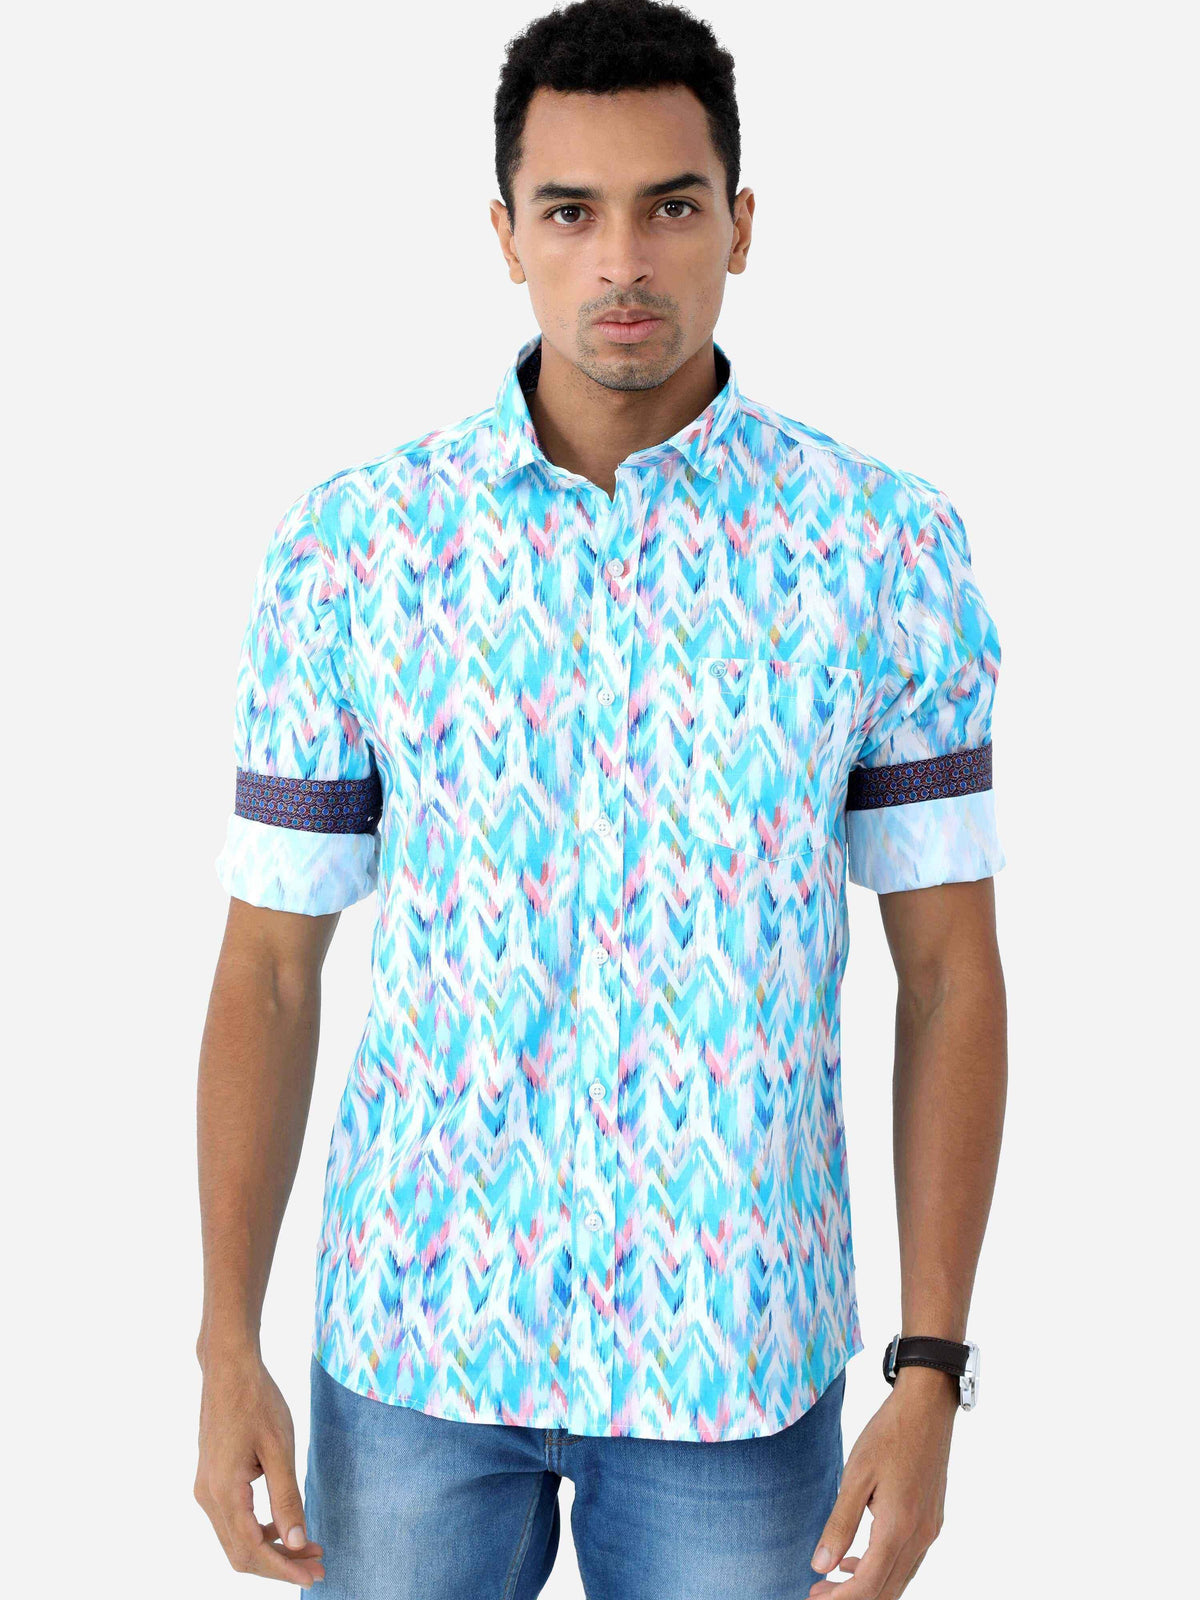 Triangle Waves Digital Printed Full Shirt - Guniaa Fashions